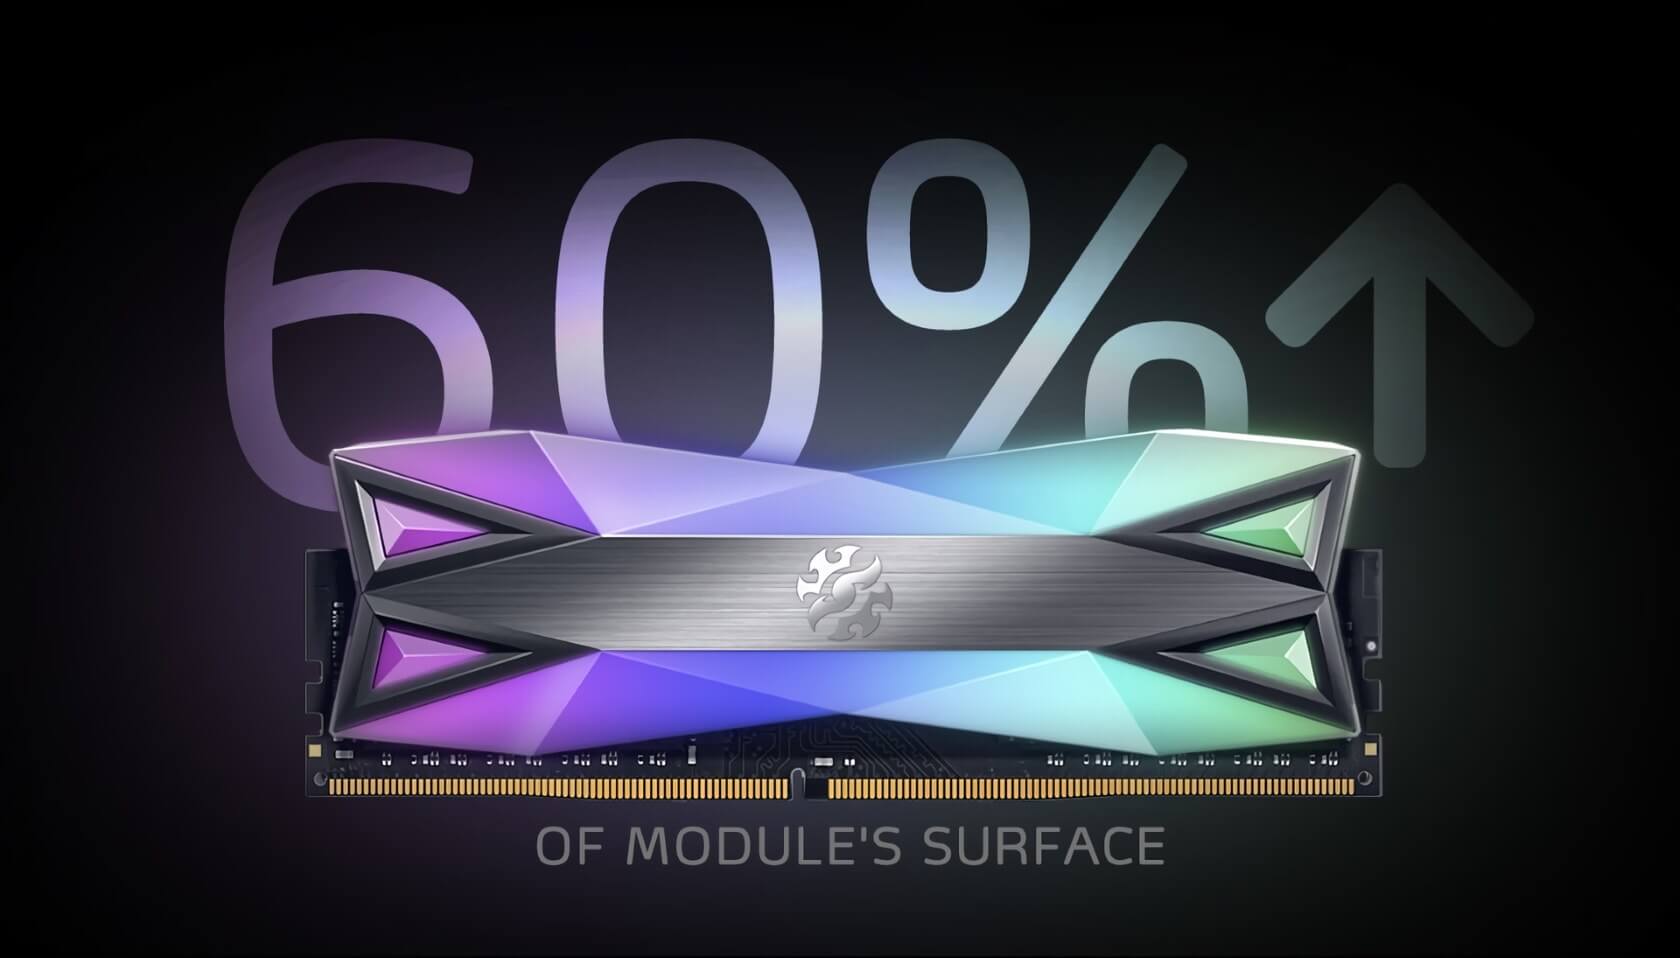 Adata shows off 'diamond-cut' RGB-covered DDR4 RAM kit